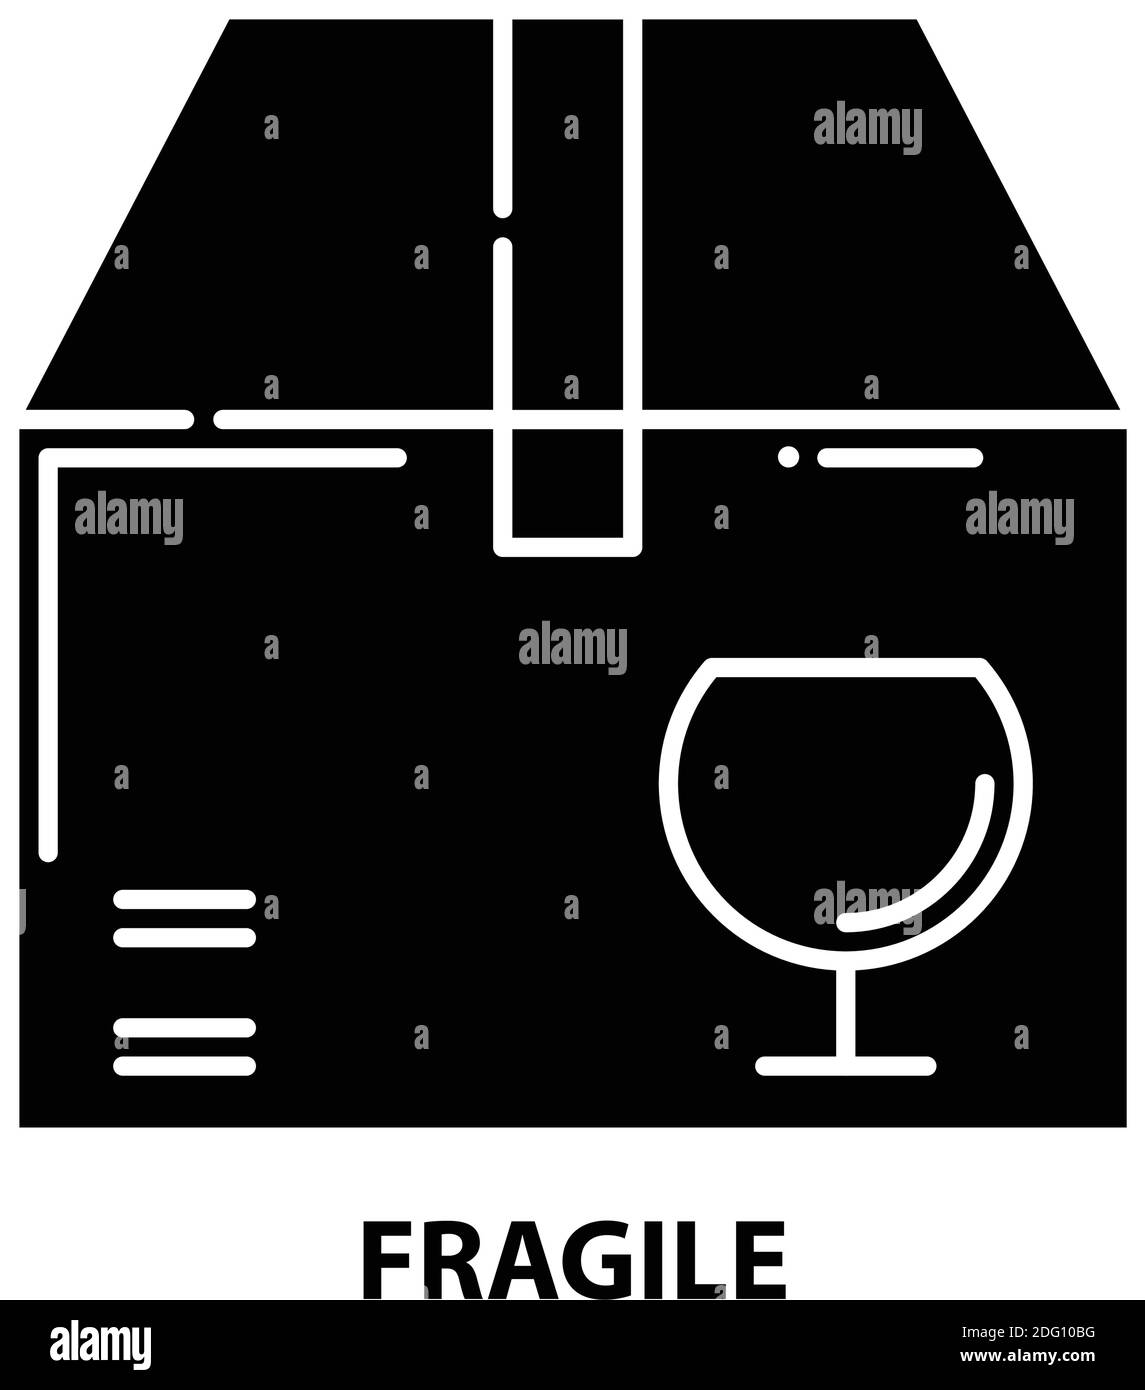 fragile symbol icon, black vector sign with editable strokes, concept illustration Stock Vector